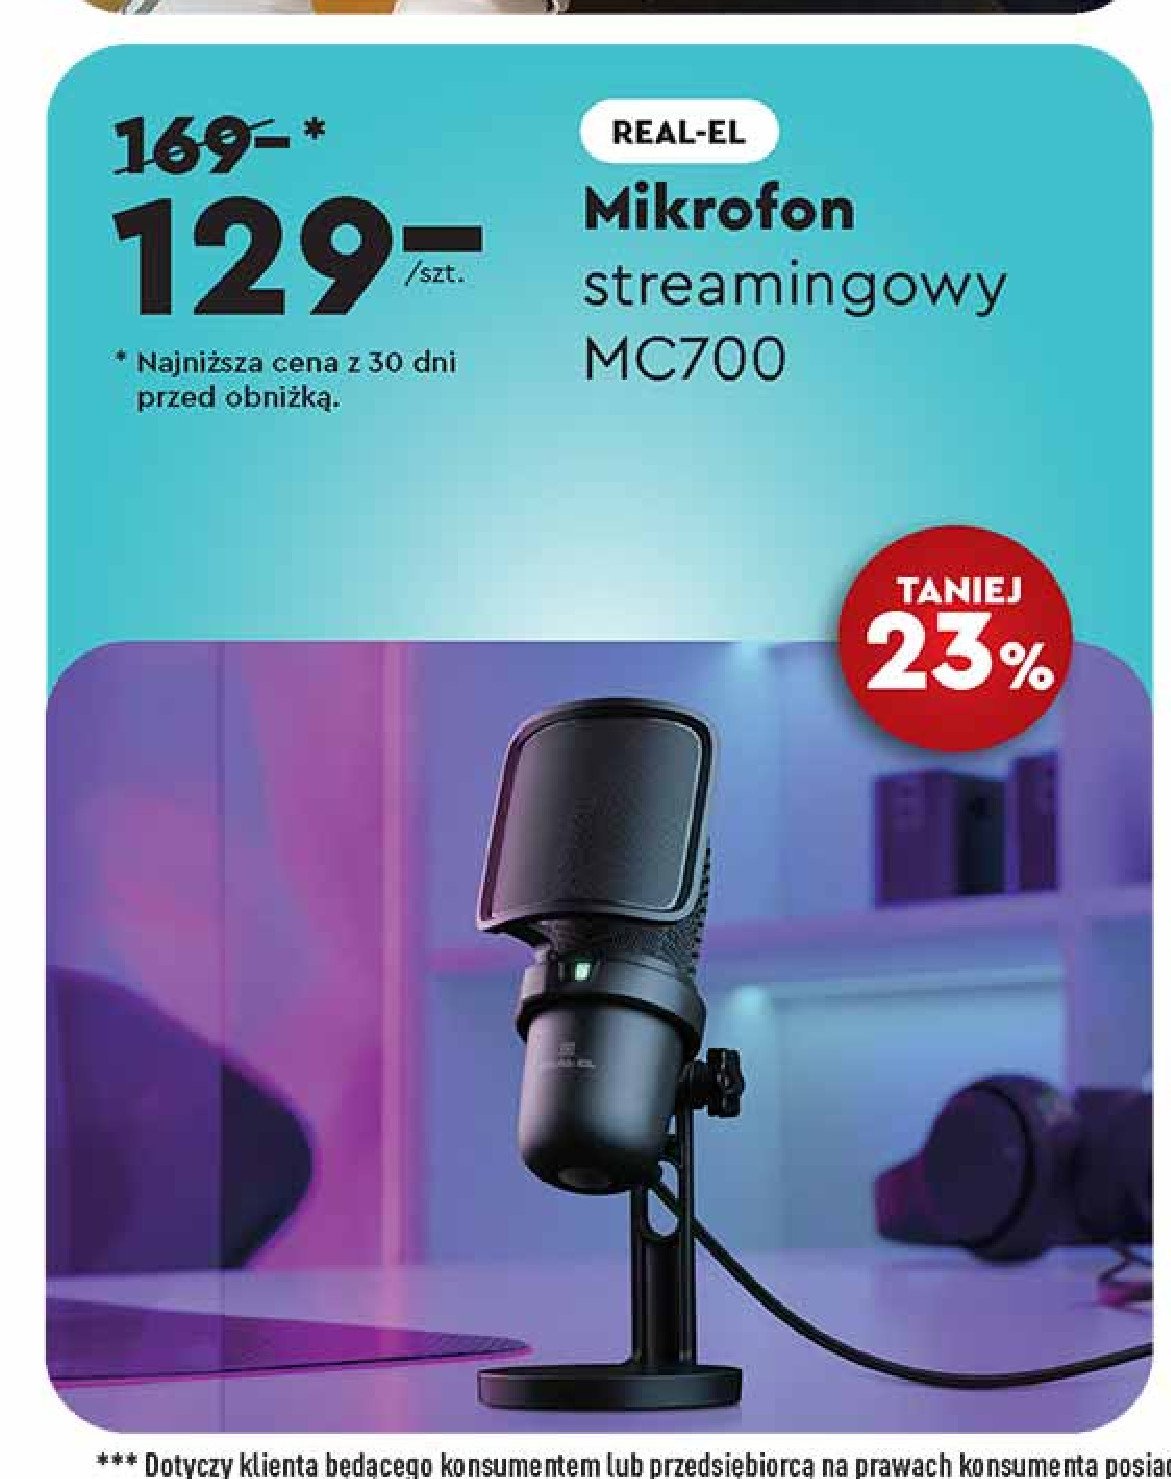 Mikrofon streamingowy mc700 REAL-EL promocja